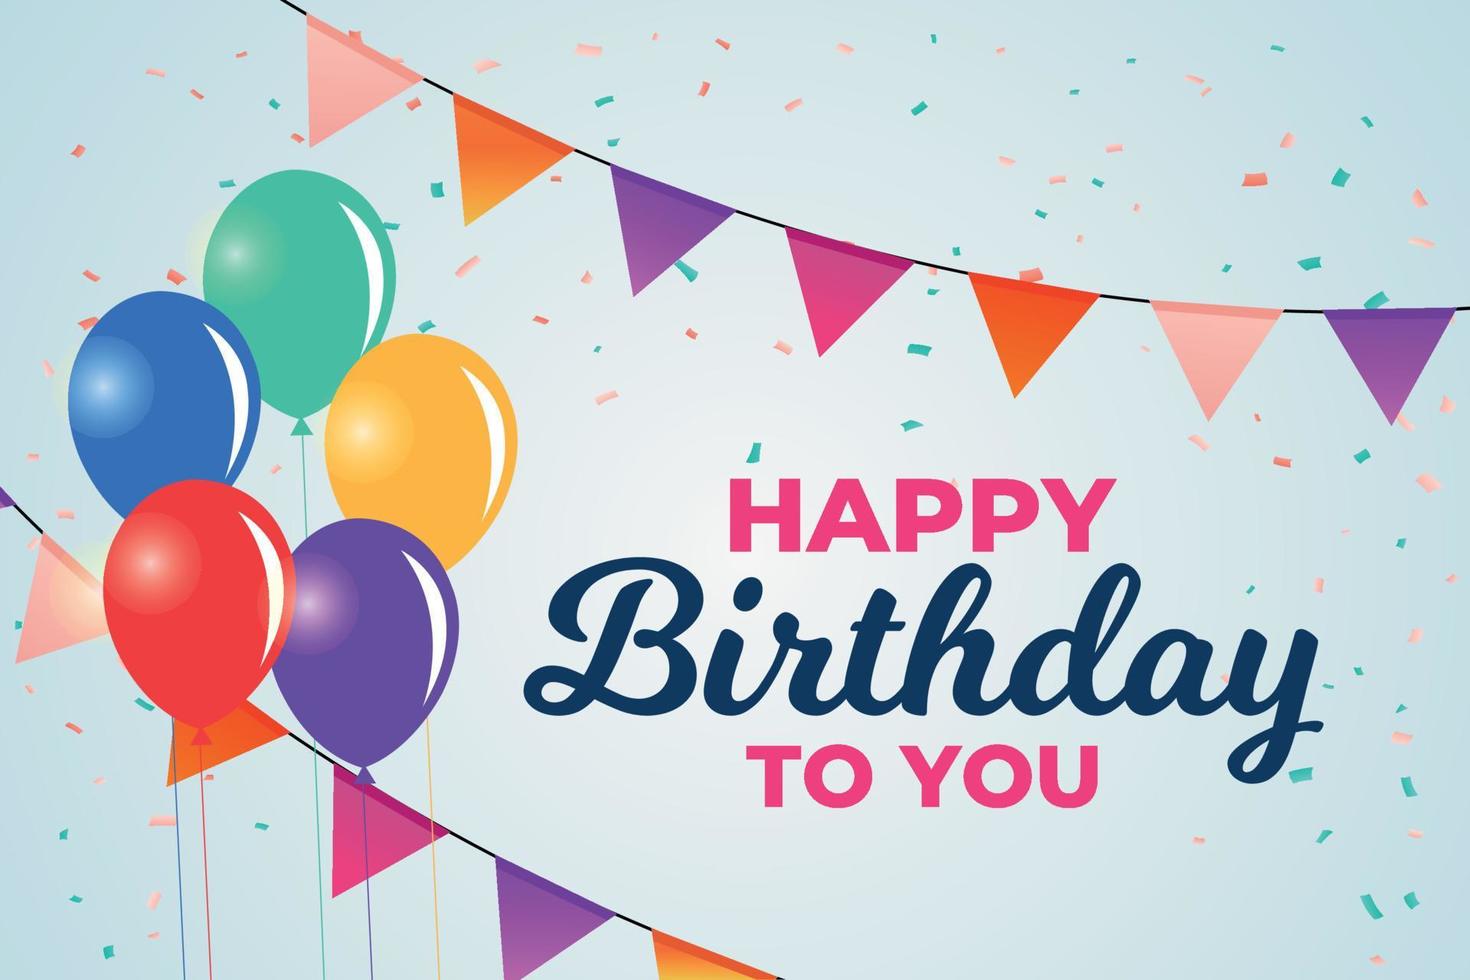 Happy birthday celebration with balloons design vector